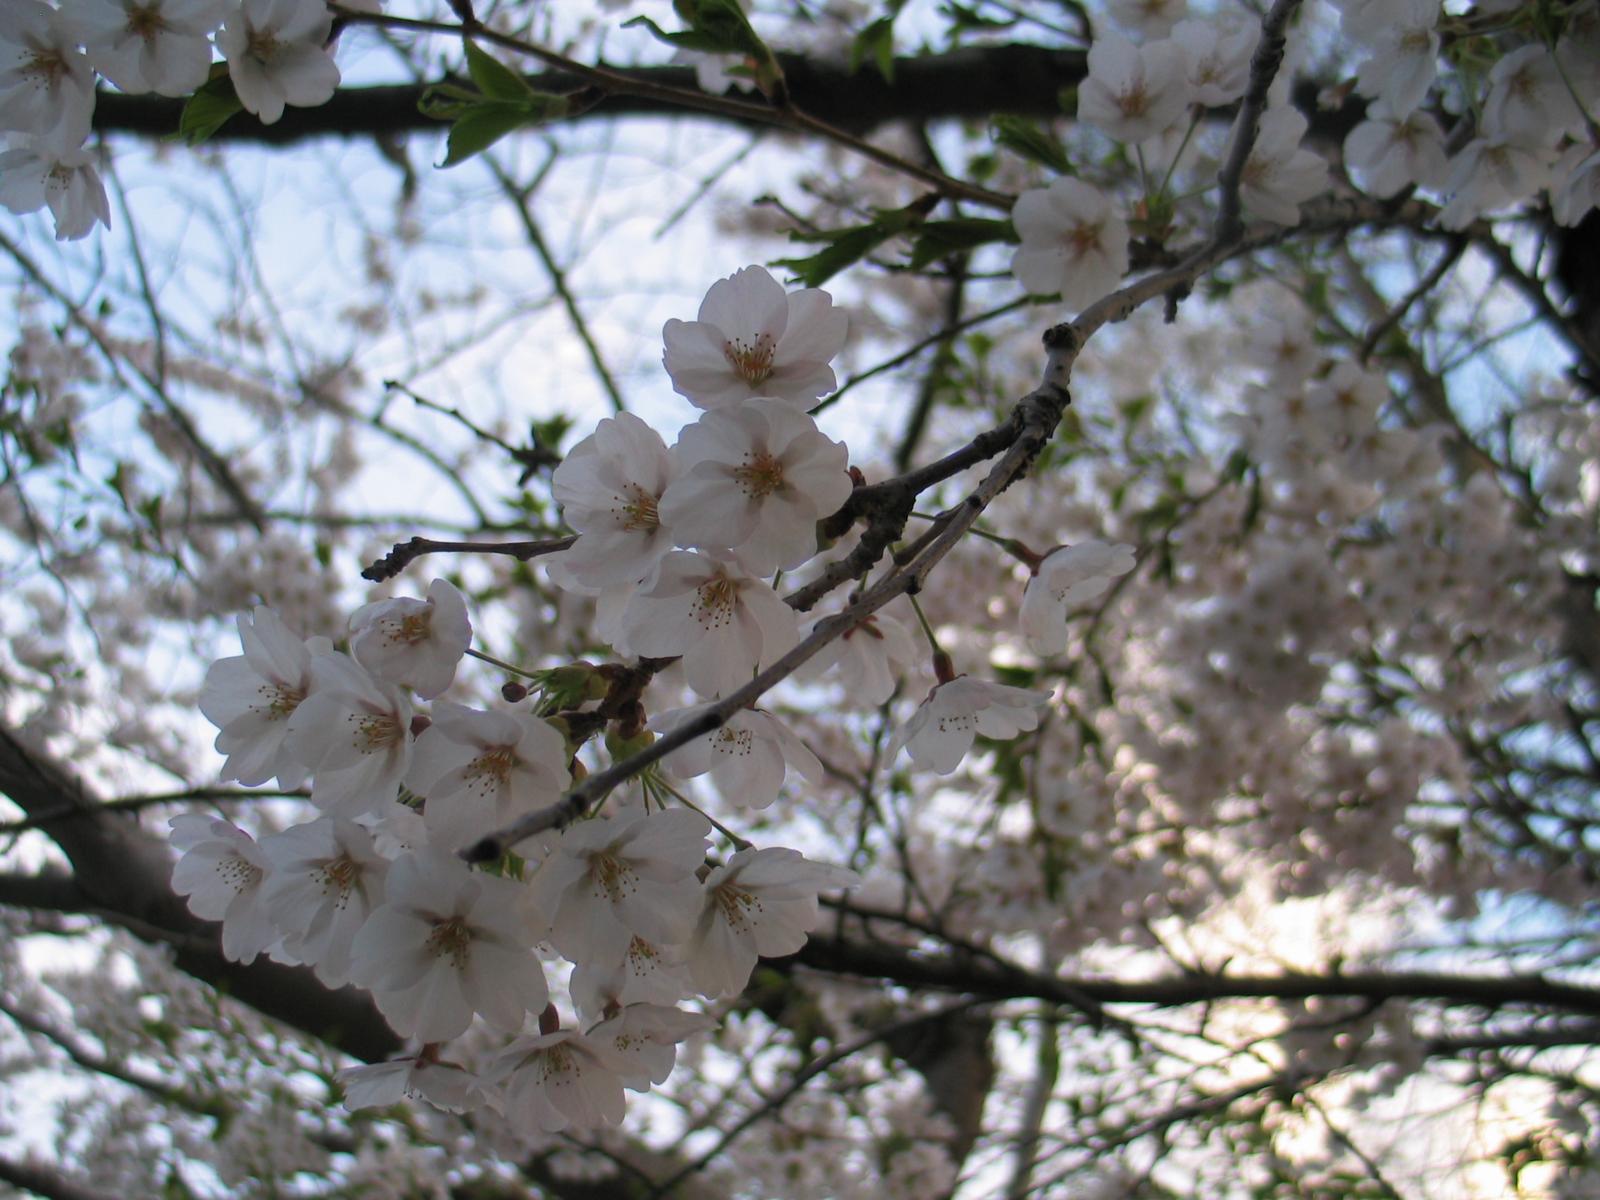 More Cherry Blossoms